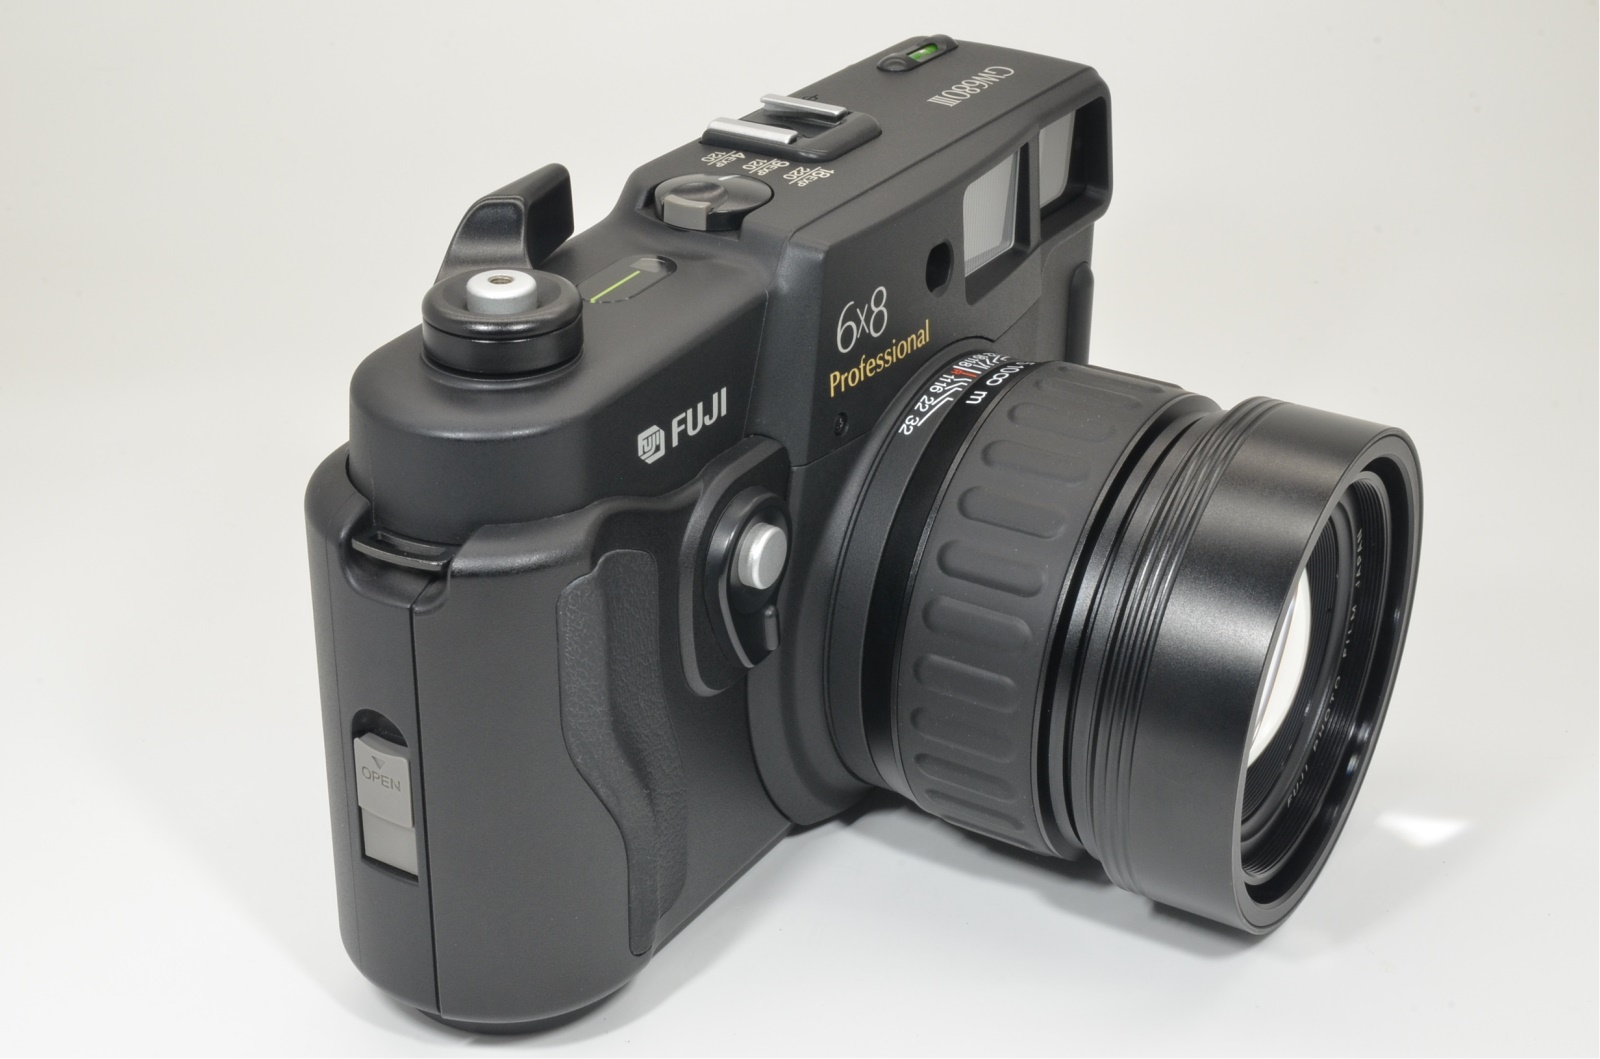 fuji fujifilm gw680iii 90mm f3.5 count 023 medium format camera shooting tested